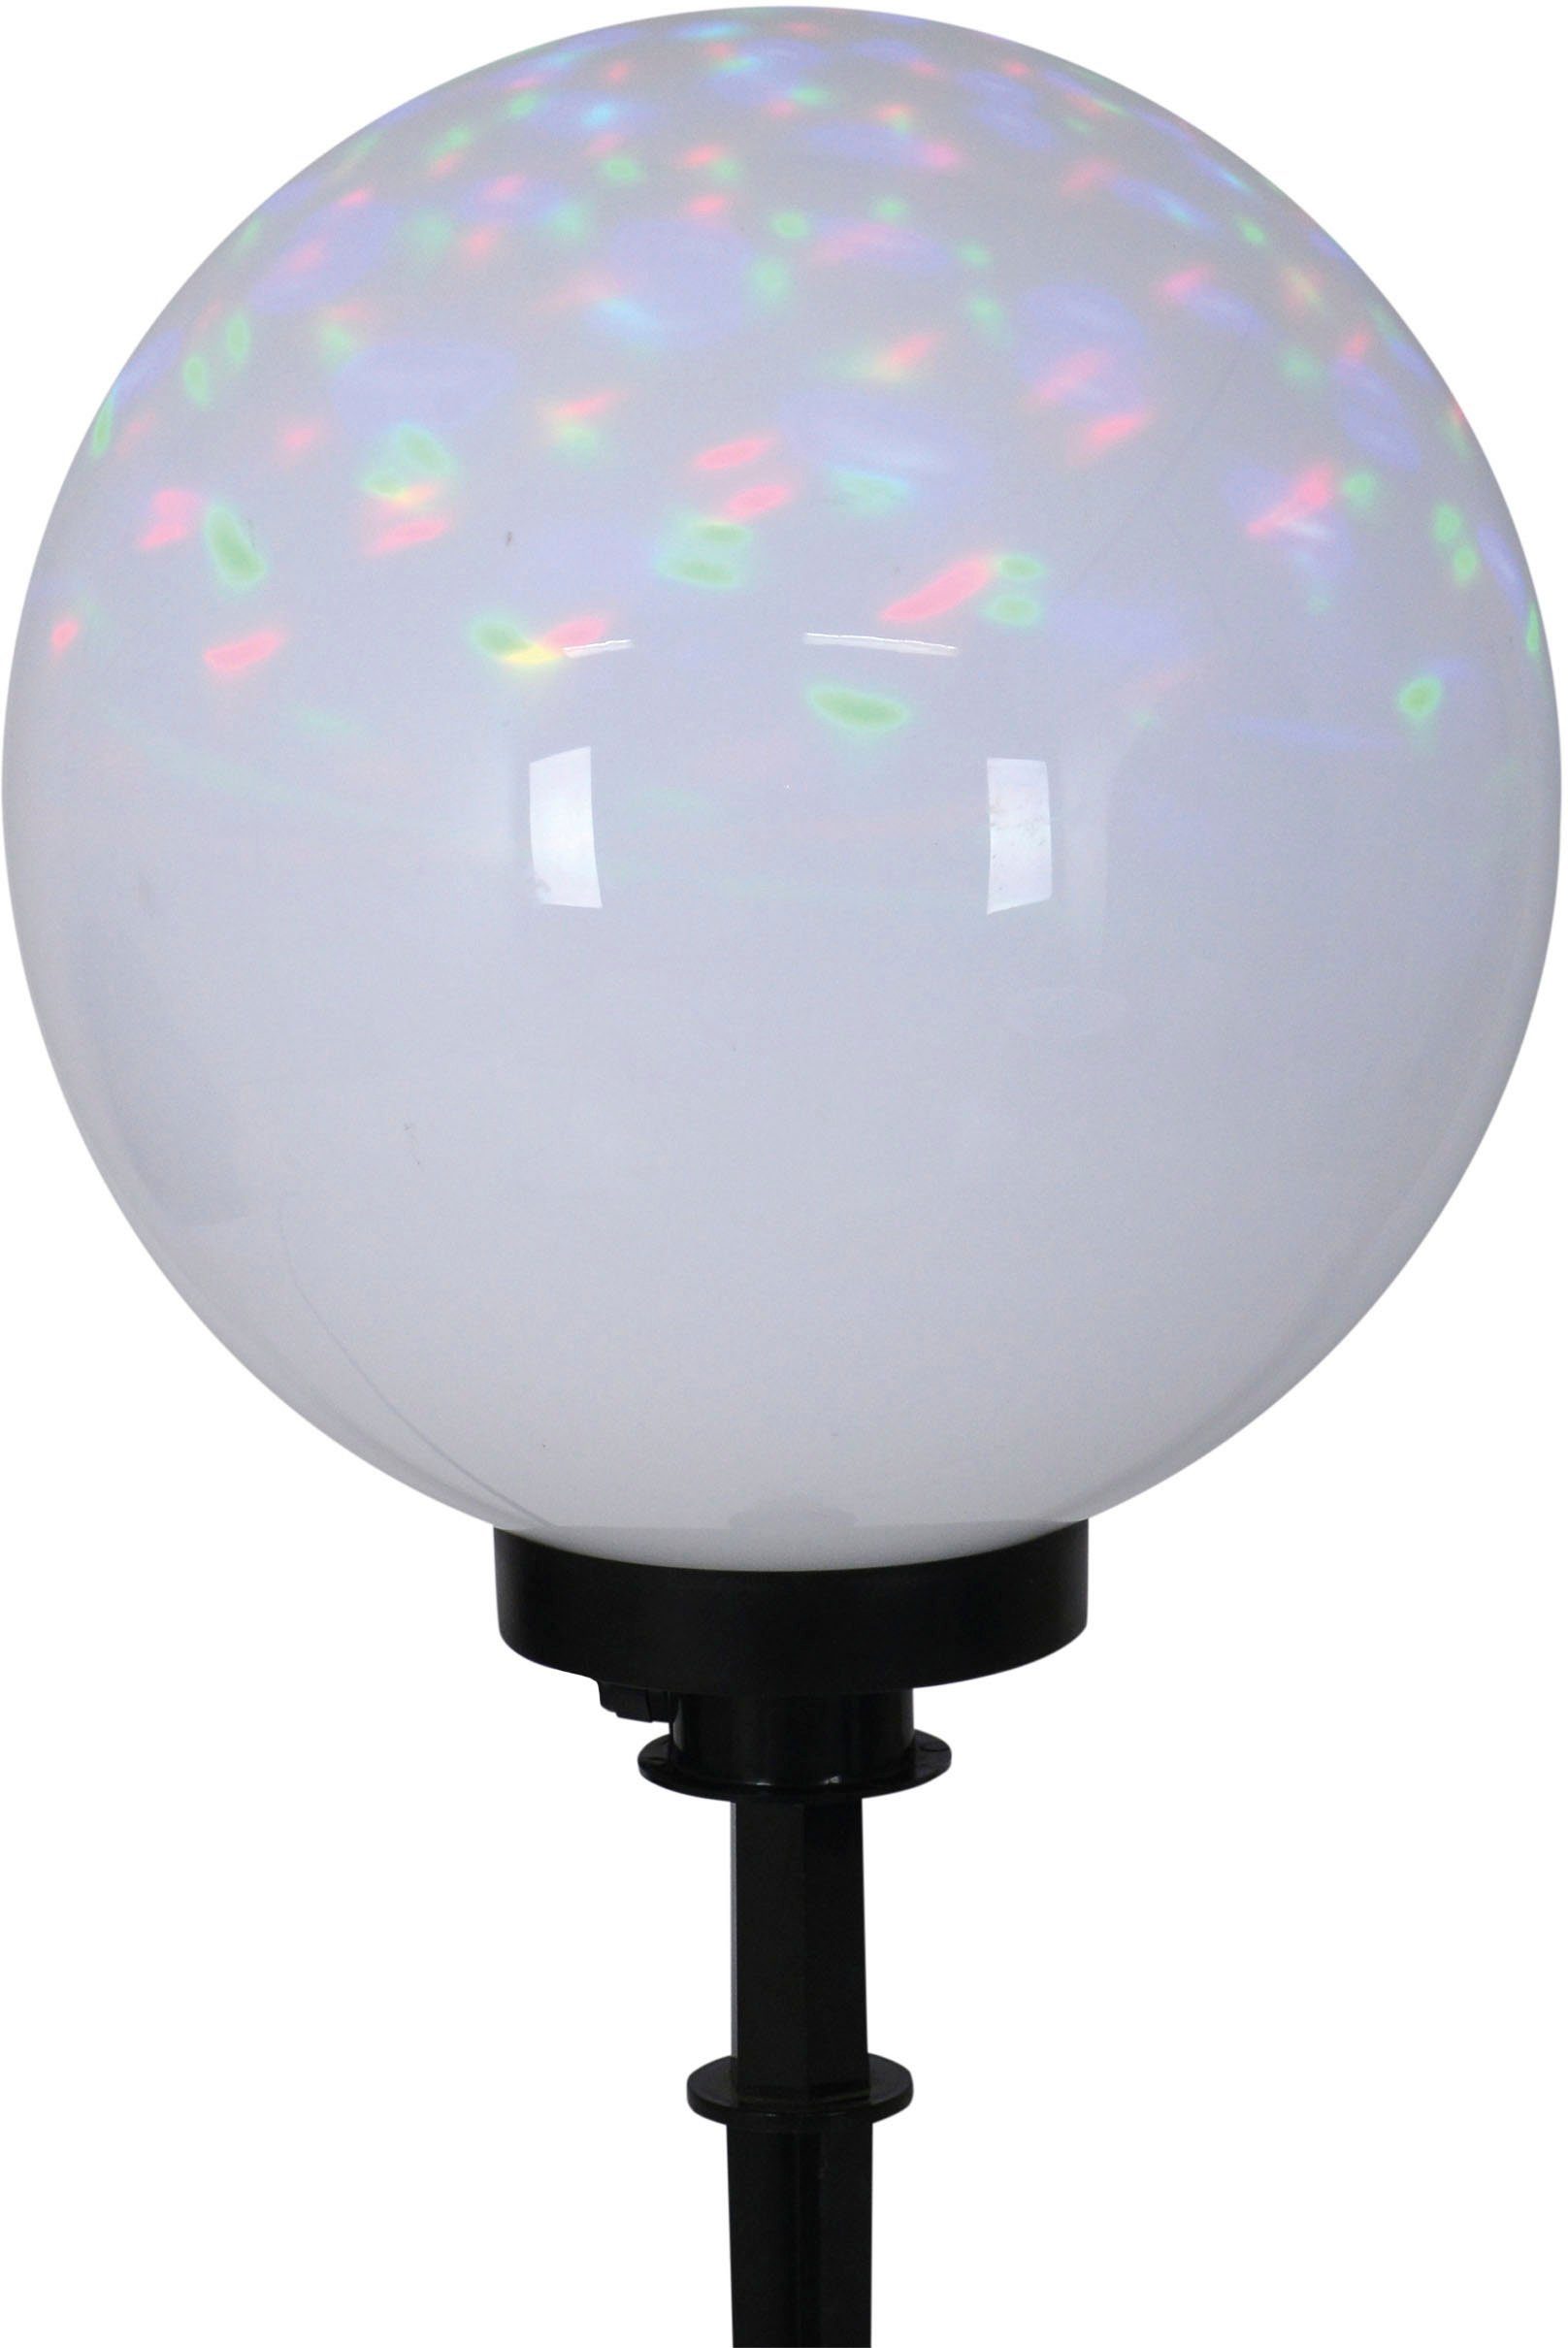 näve Kugelleuchte Ball, Leuchtmittel wechselbar, Kunststoff, weiß/opal, D: 30cm, Spieß schwarz, exkl. 1 x E27 max. 40W | Alle Lampen